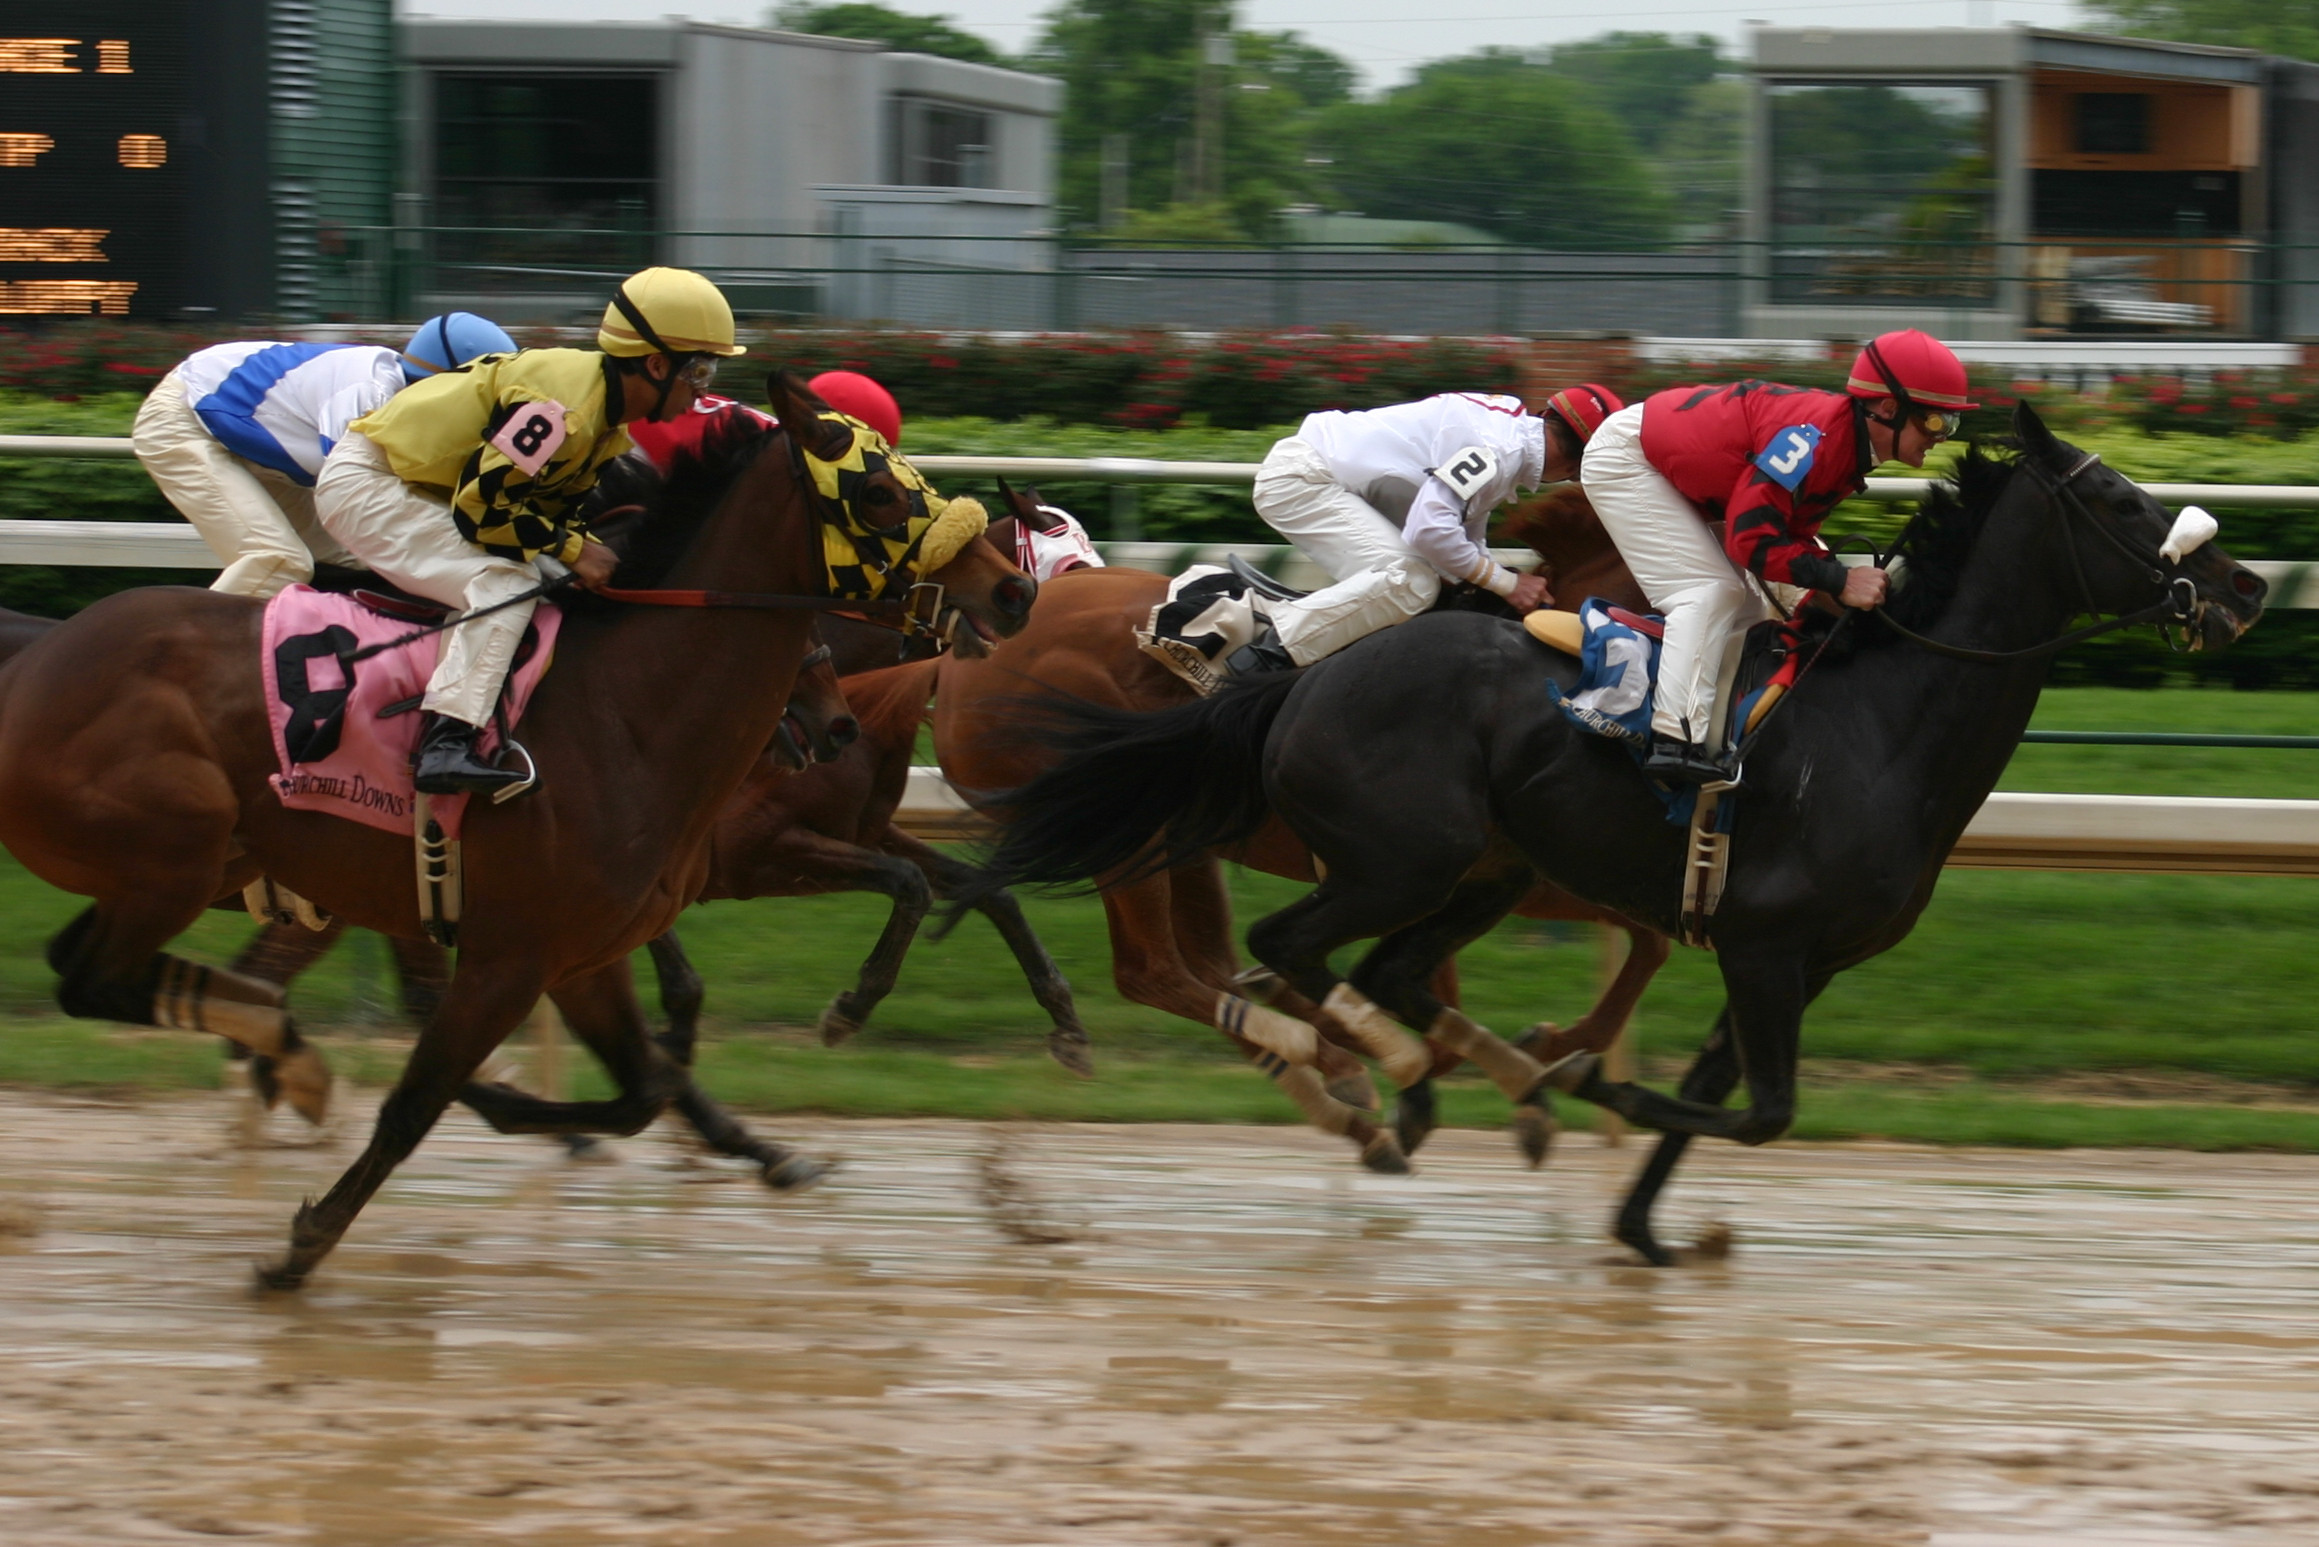 Horse race Churchill Downs 2008 04 18